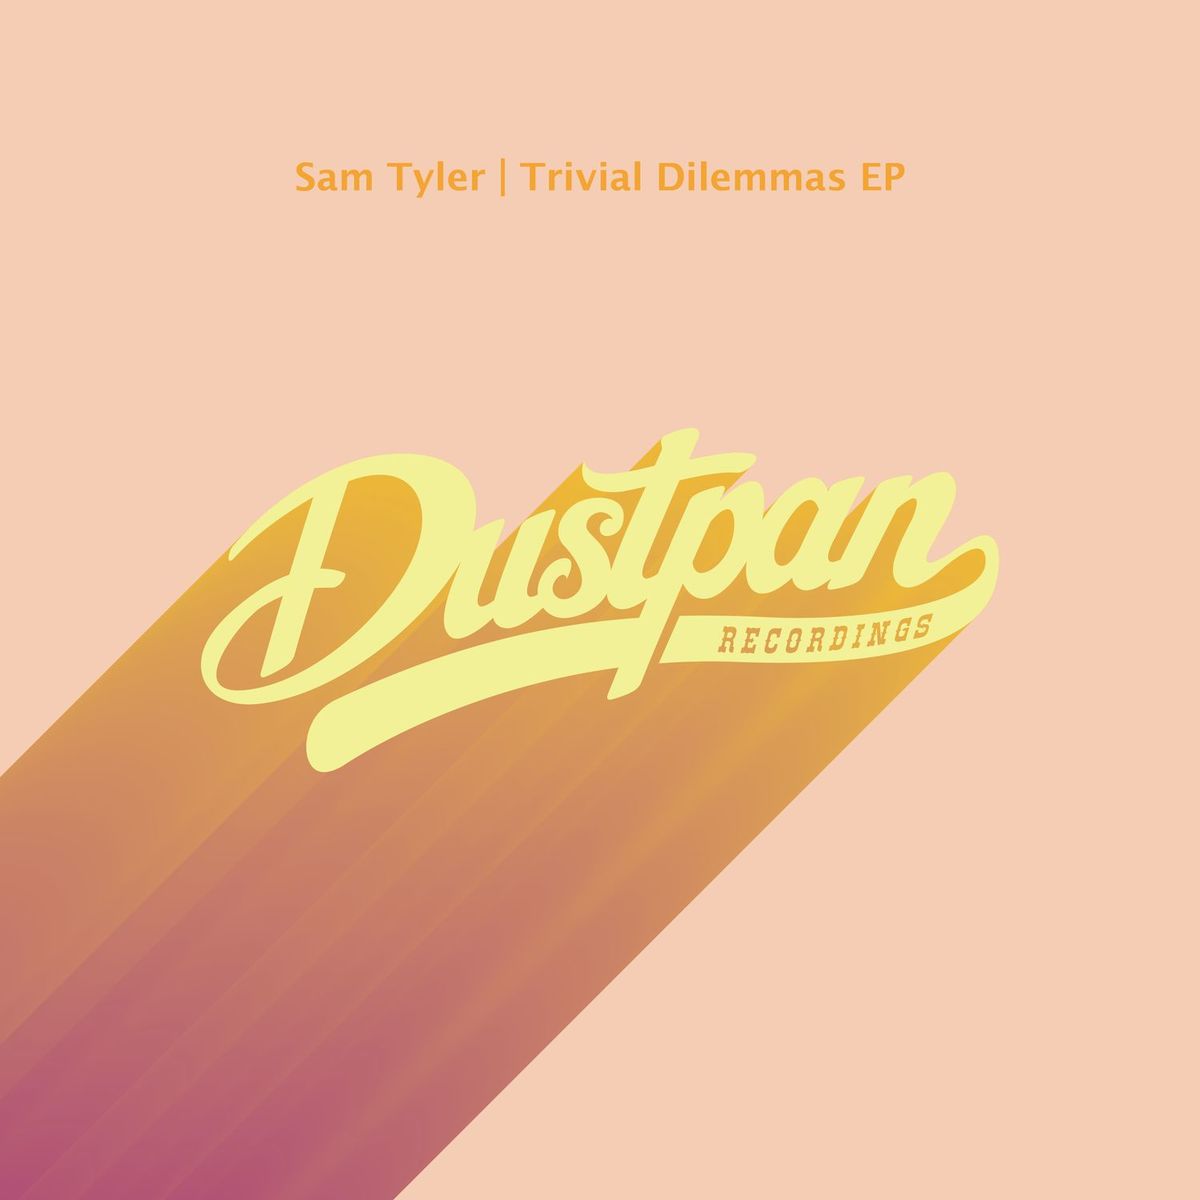 Sam Tyler - Trivial Dilemmas EP / Dustpan Recordings